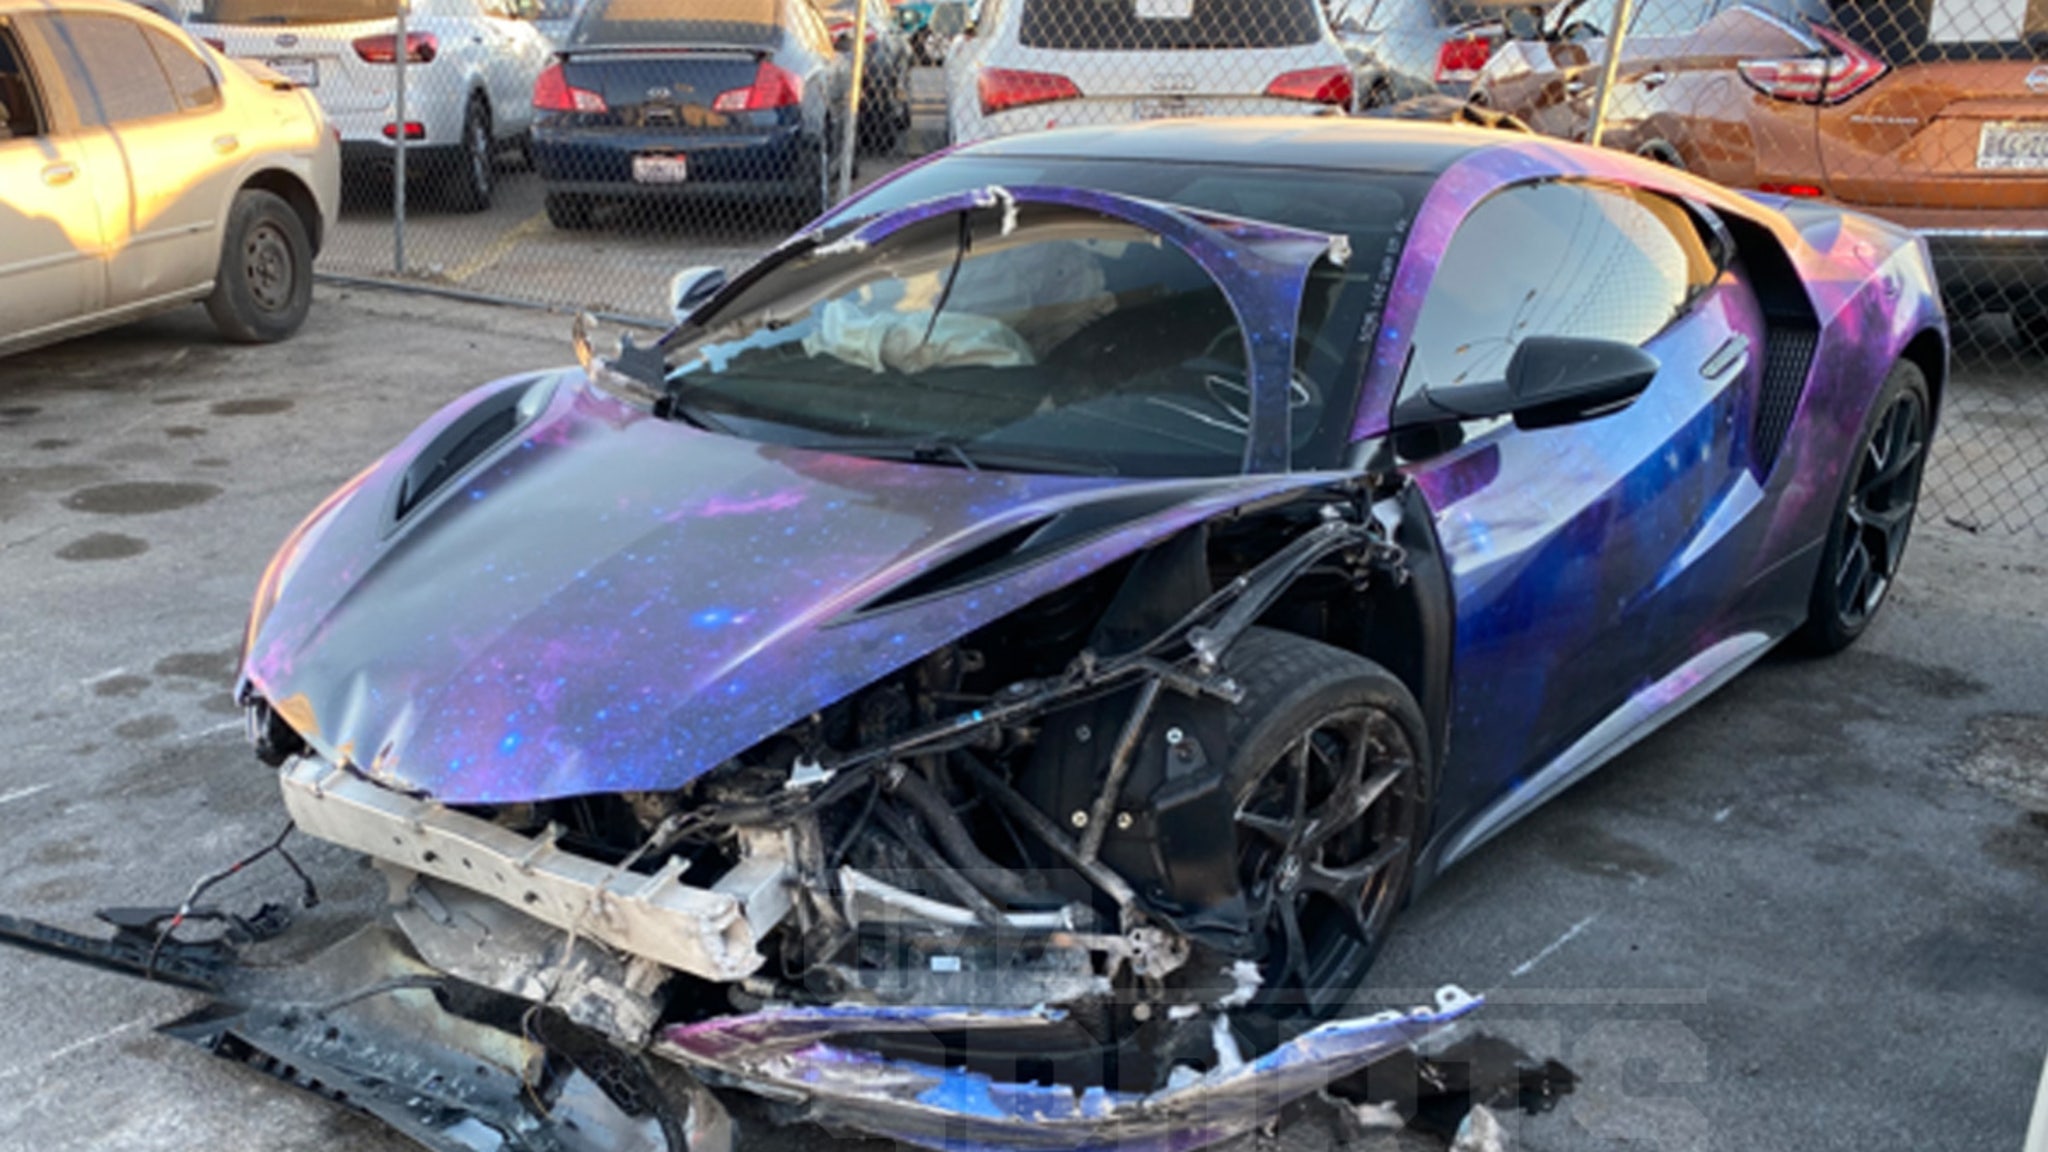 NFL Star Josh Jacobs Crash Photos Shows $ 160K Supercar After Accident in Vegas